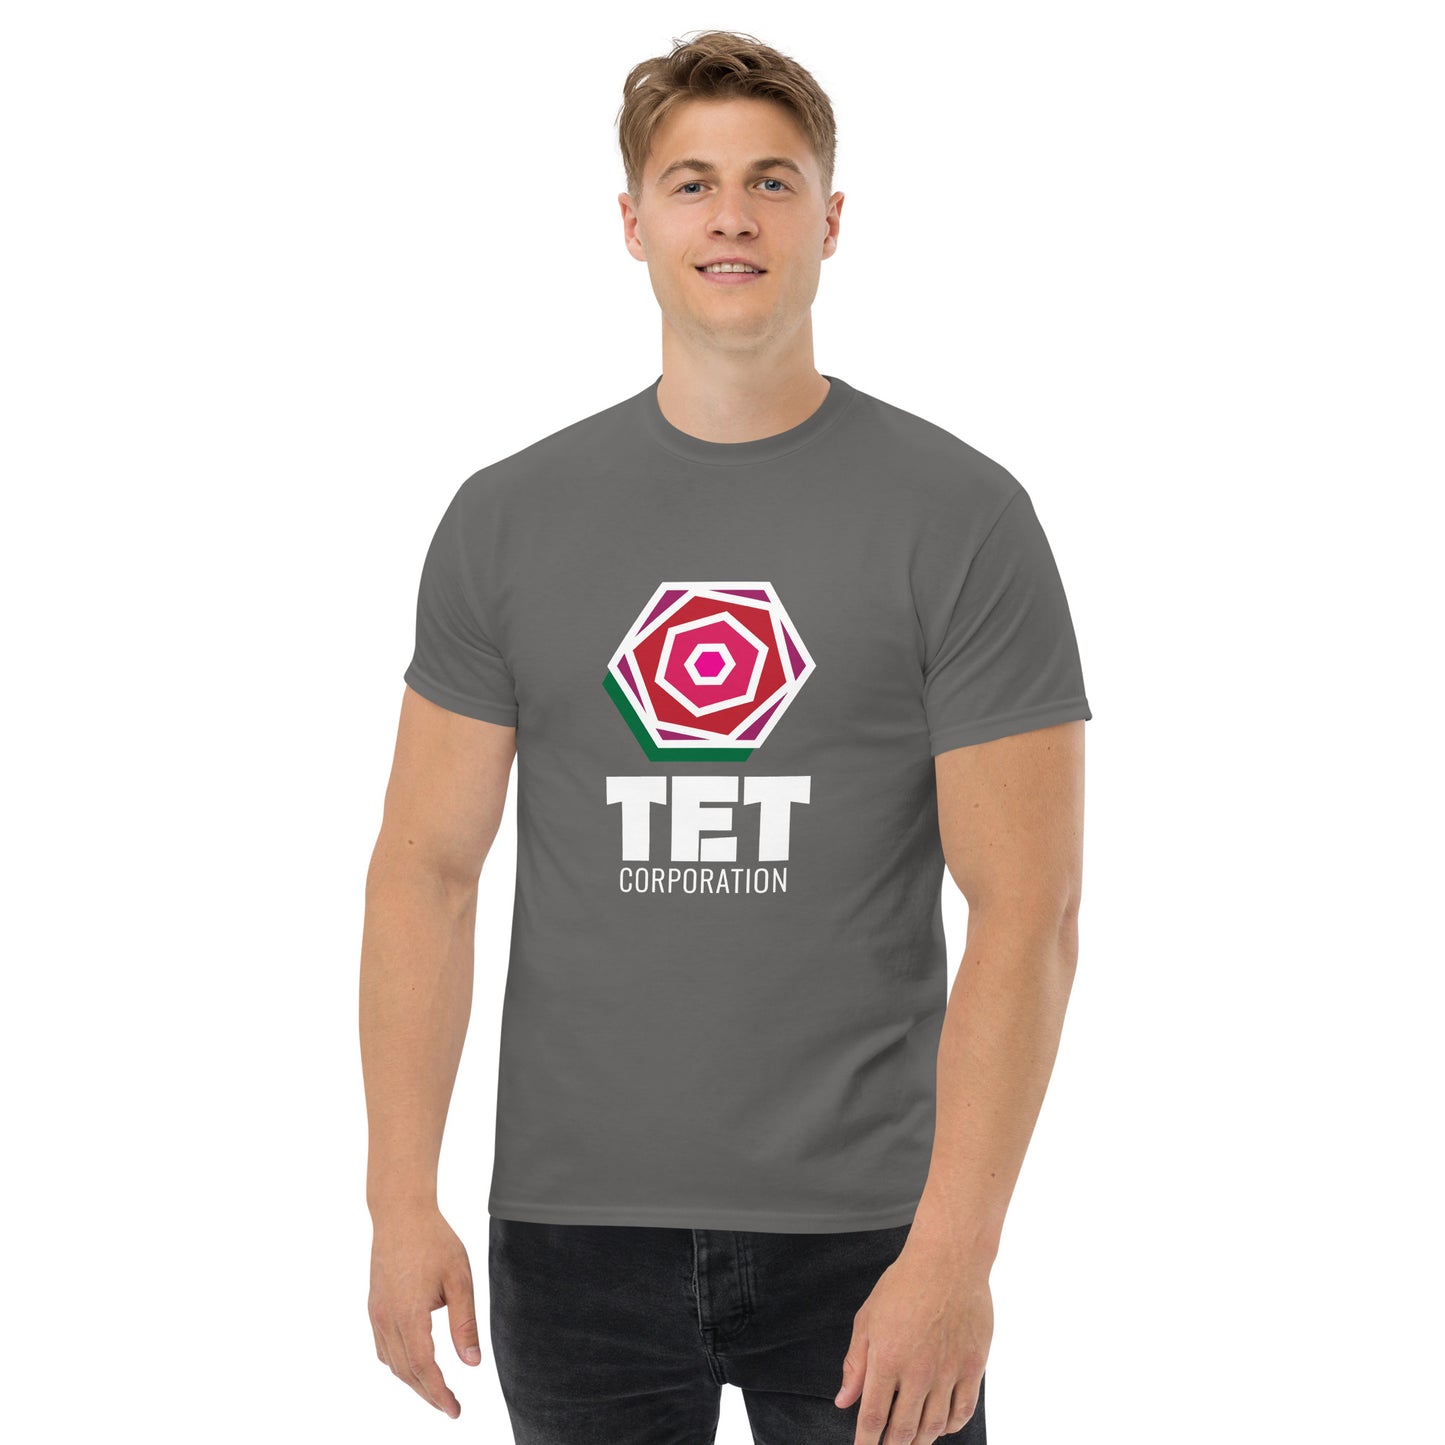 Tet Corporation T-Shirt, White Logo, Classic Fit